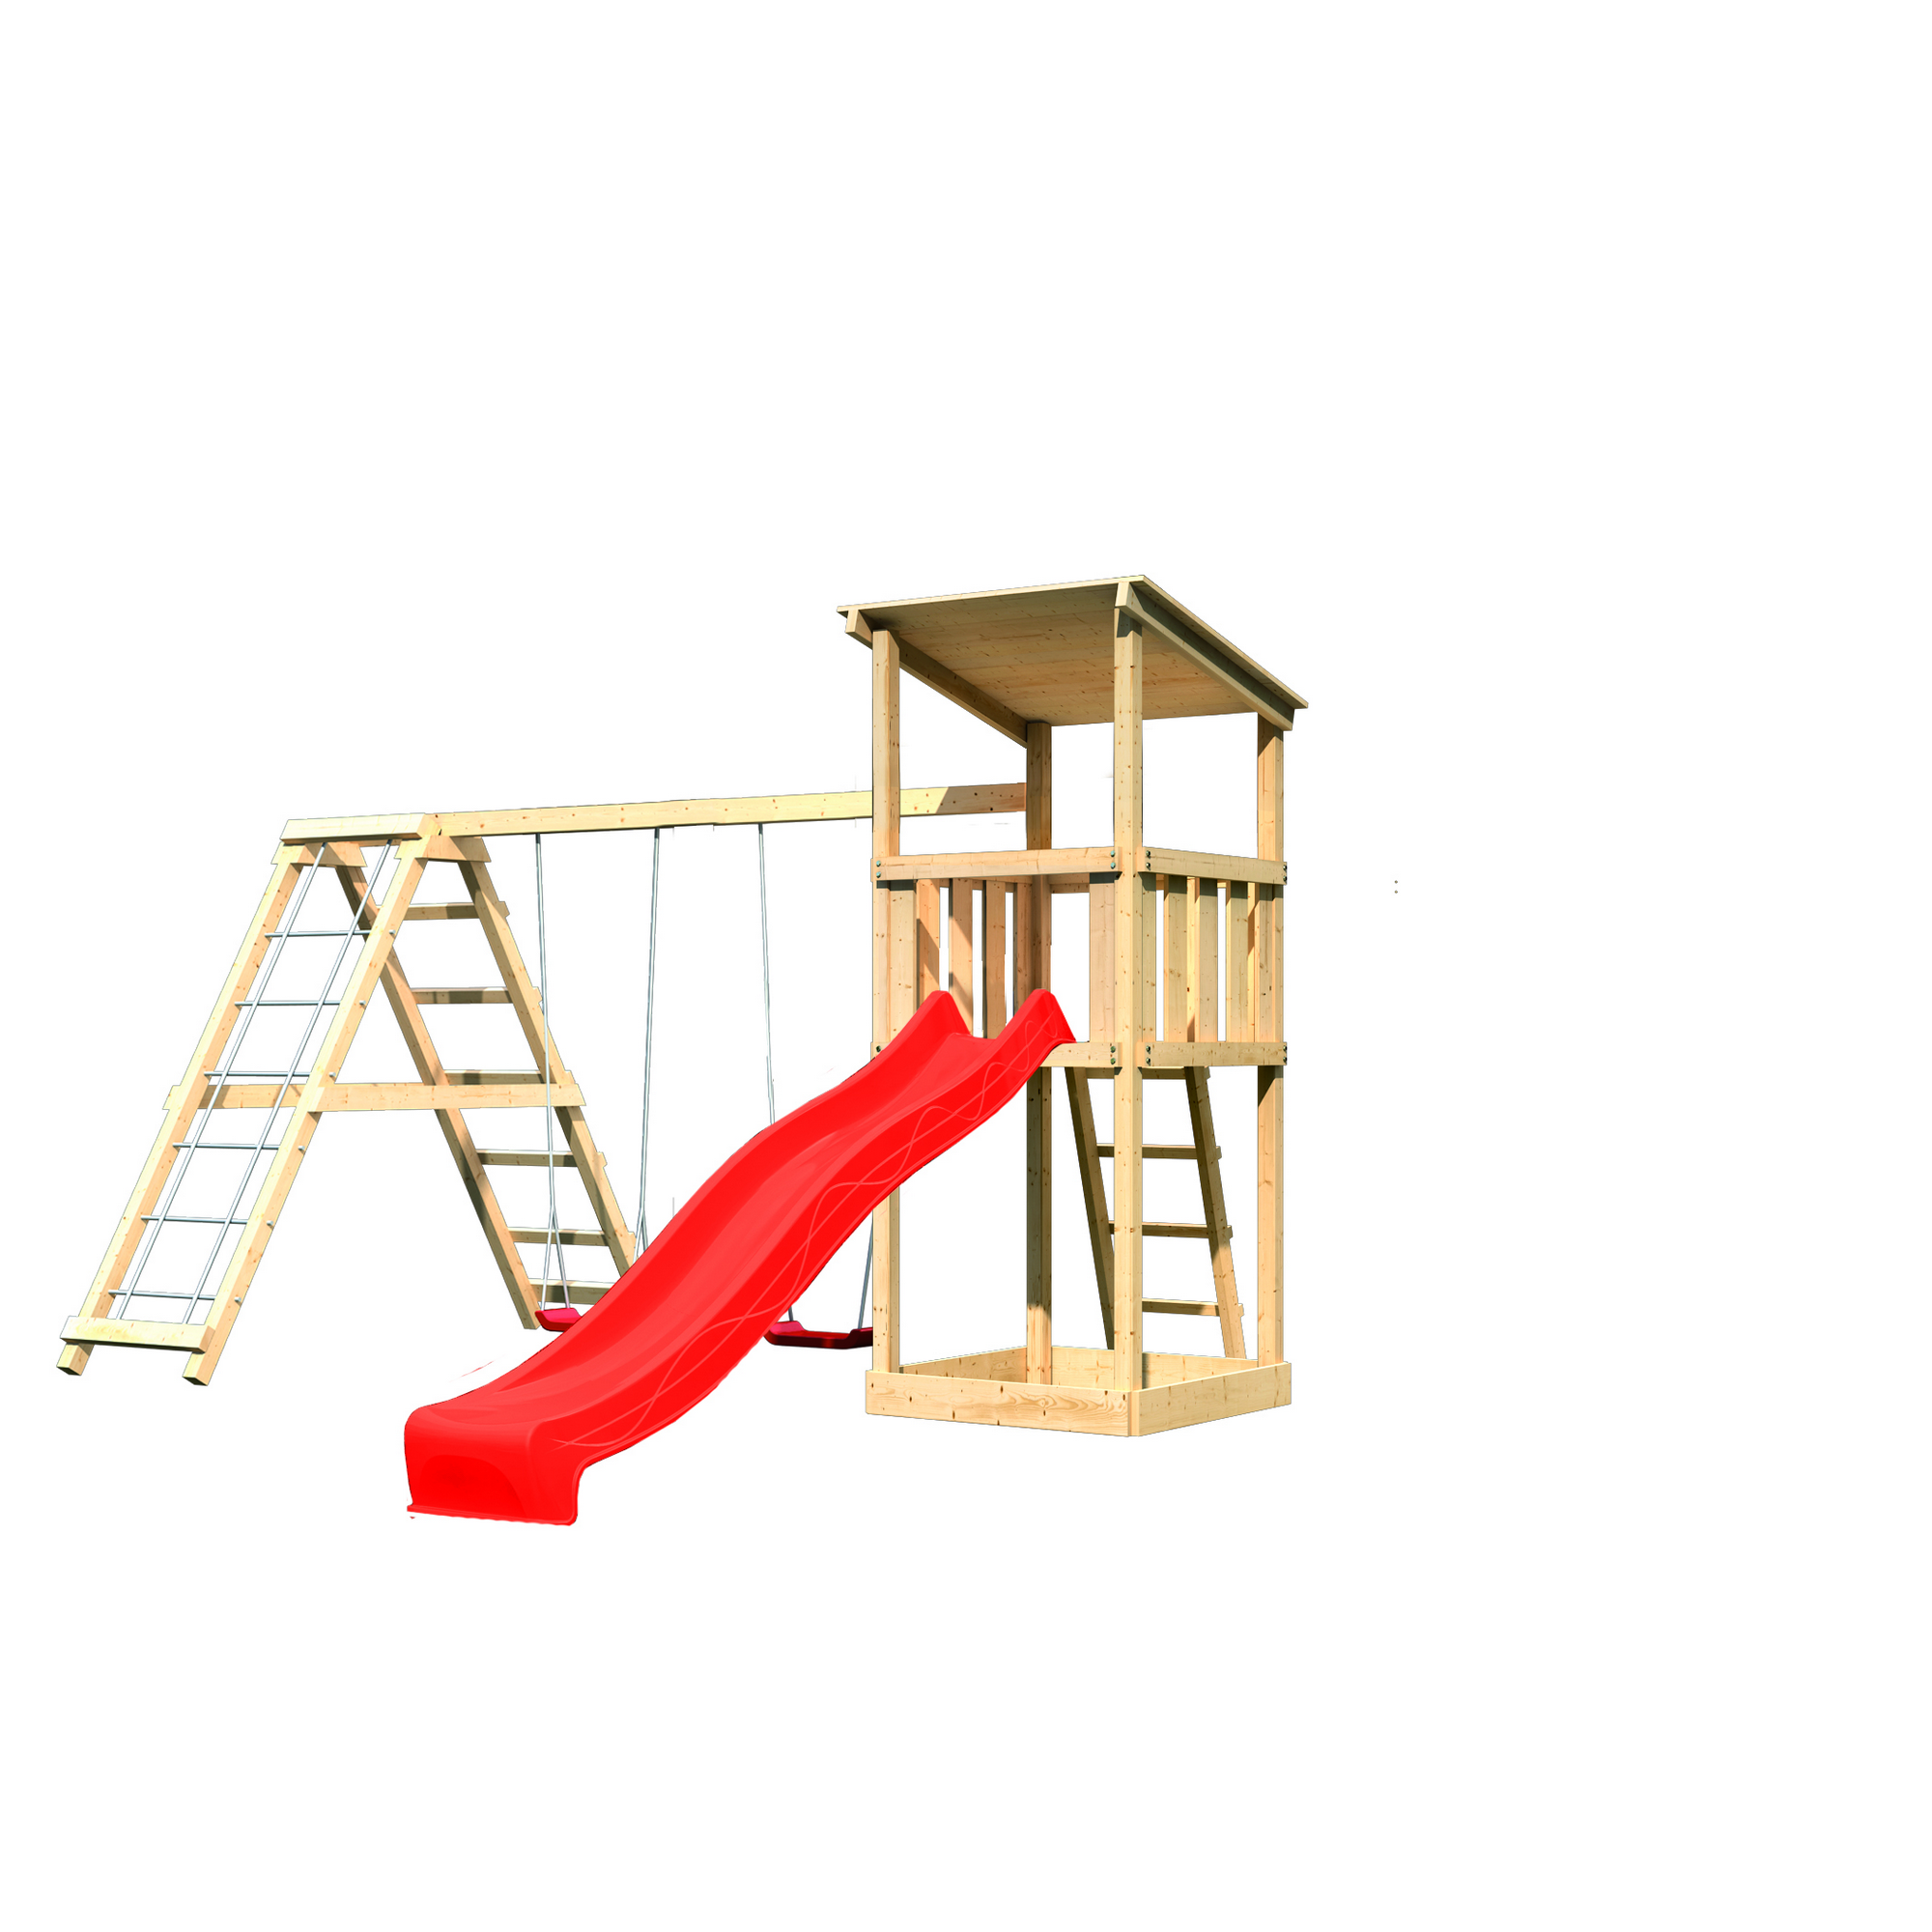 Spielturm 'Anna' Doppelschaukel, Klettergerüst, Rutsche rot, 415 x 264 x 270 cm + product picture